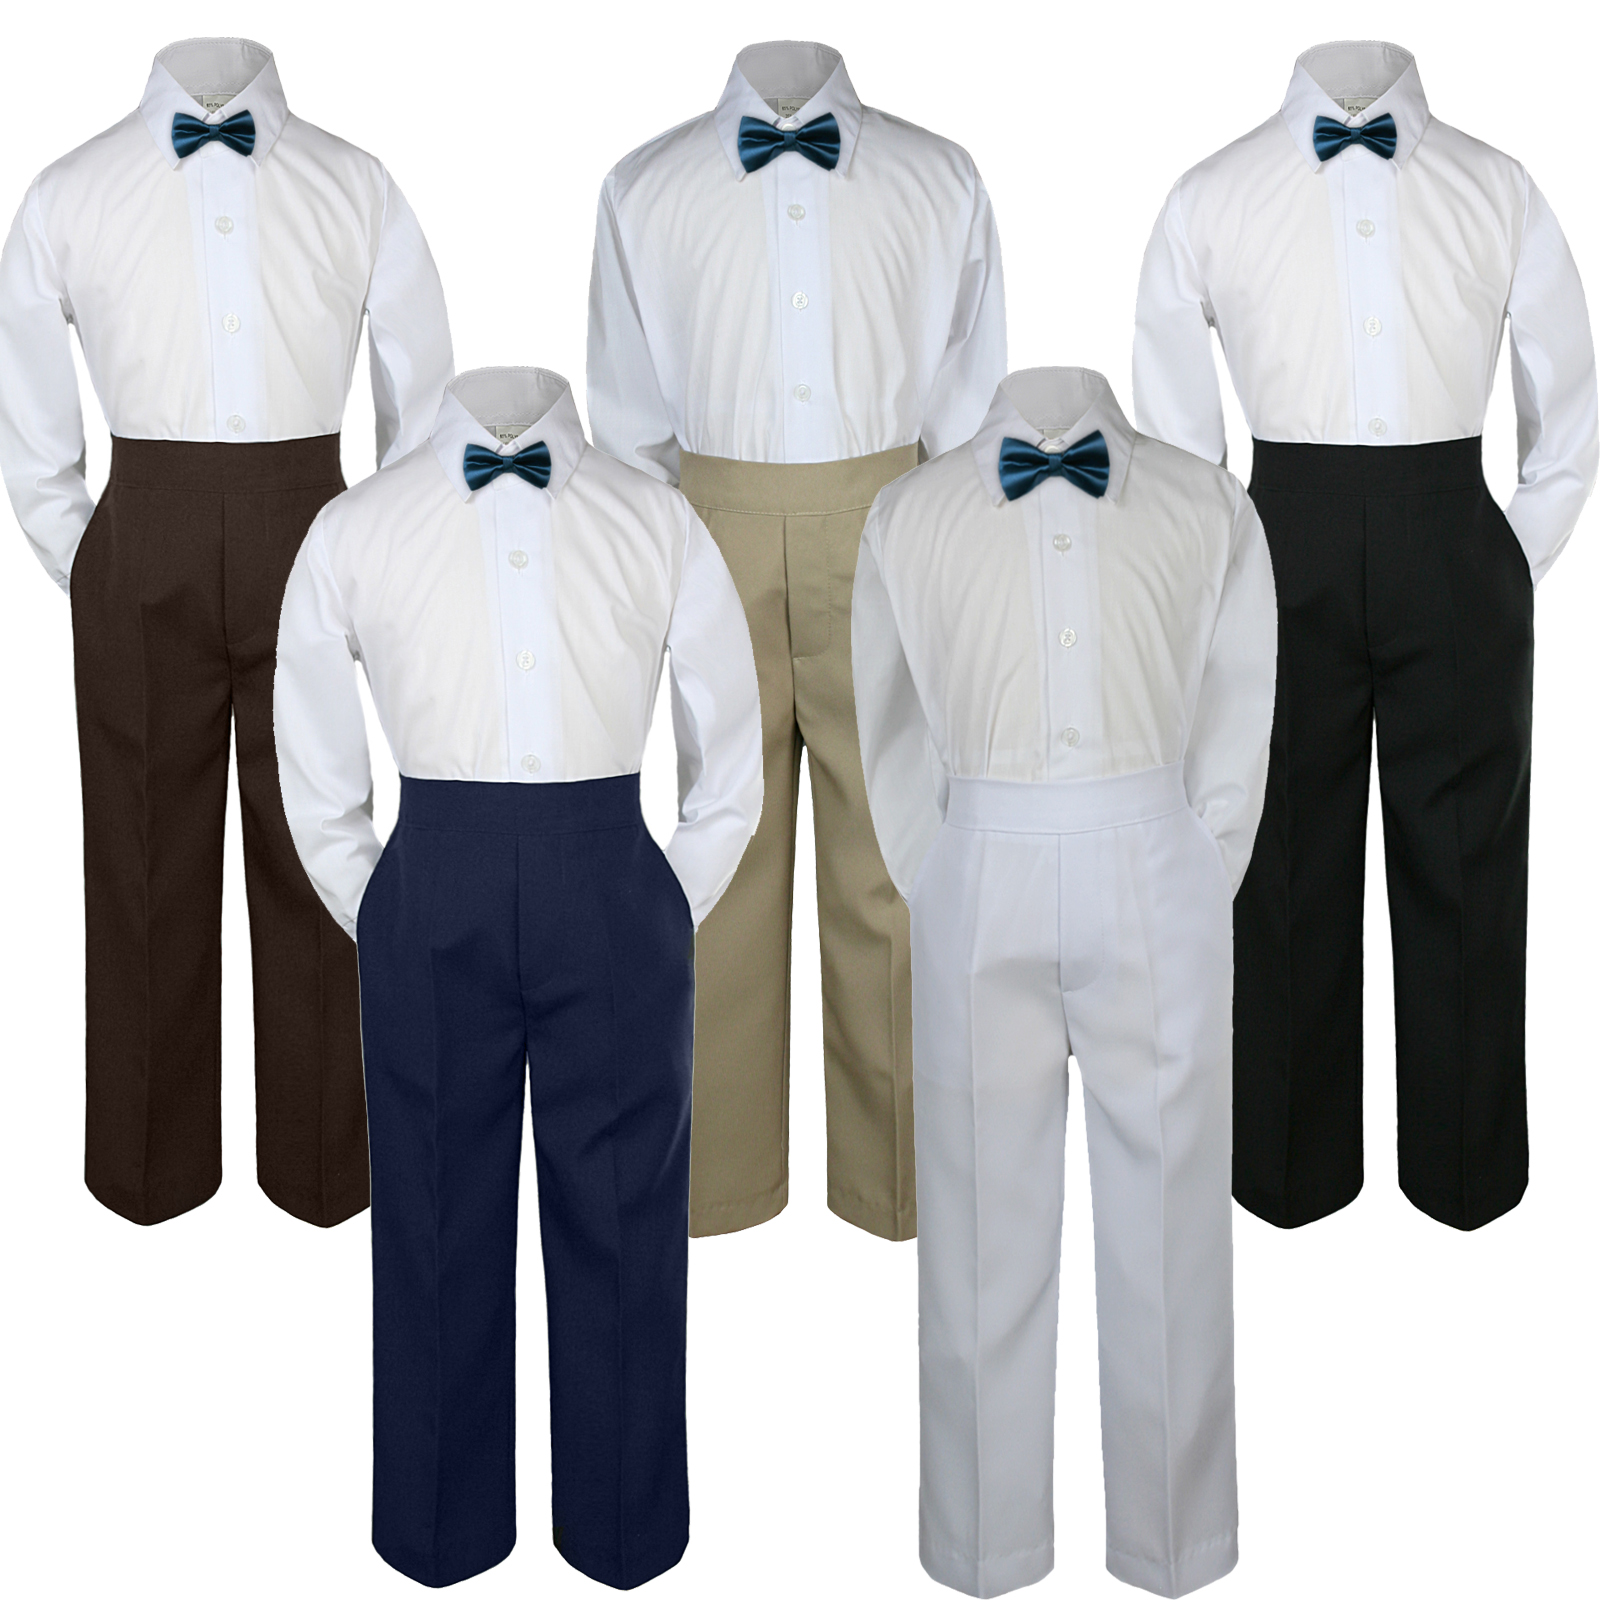 Leadertux 3pc S M L XL 2T 3T 4T Baby Toddler Boy Shirt Pants Suit Tuxedo Formal Wedding Party Green Teal Oasis Sea Bow Tie Set